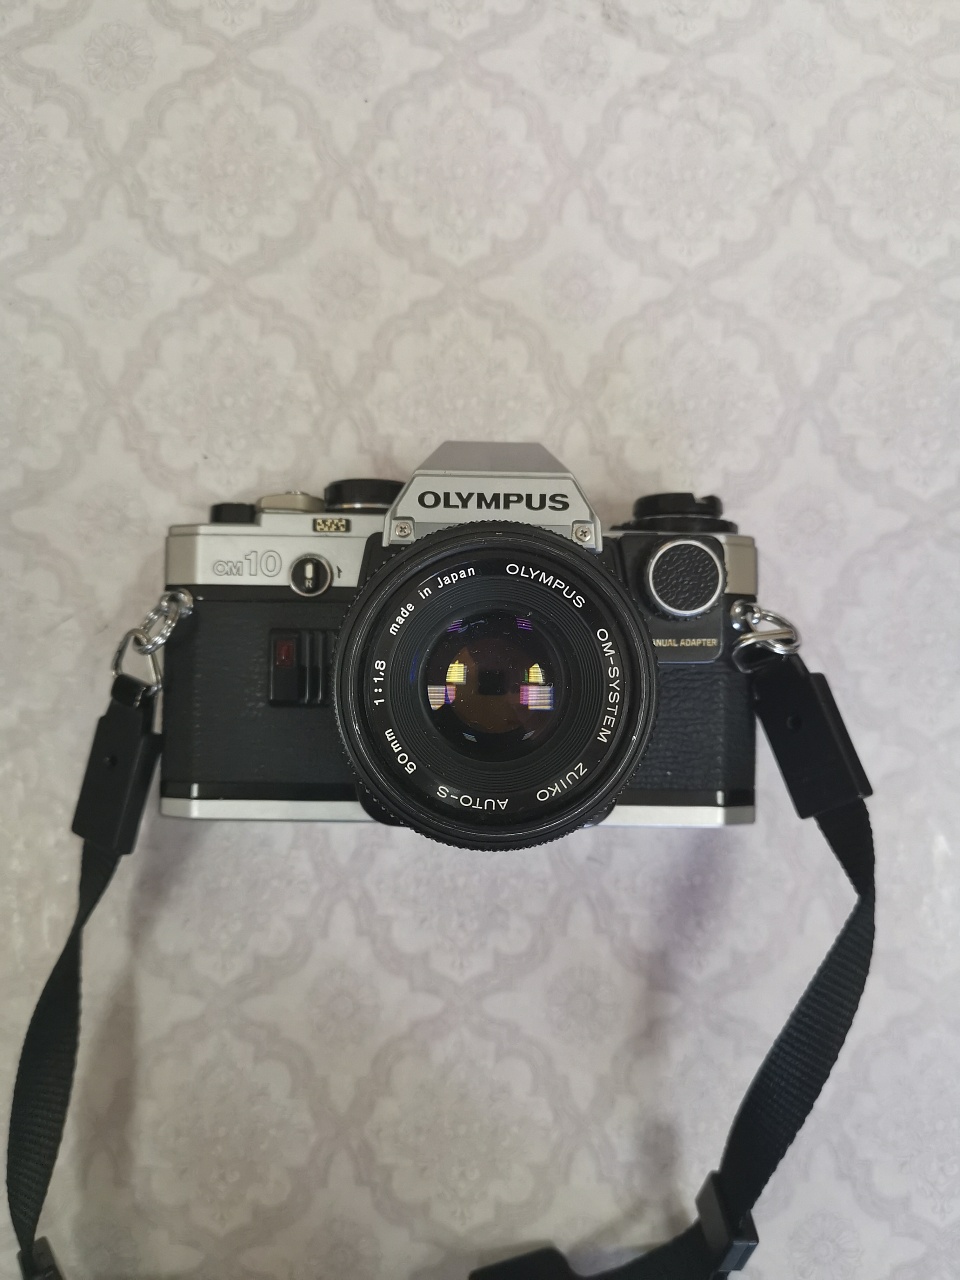 Olympus OM-10 + Olympus OM-System Zuiko 50 mm f/ 1.8 Auto-S + Manual Adapter фото №1